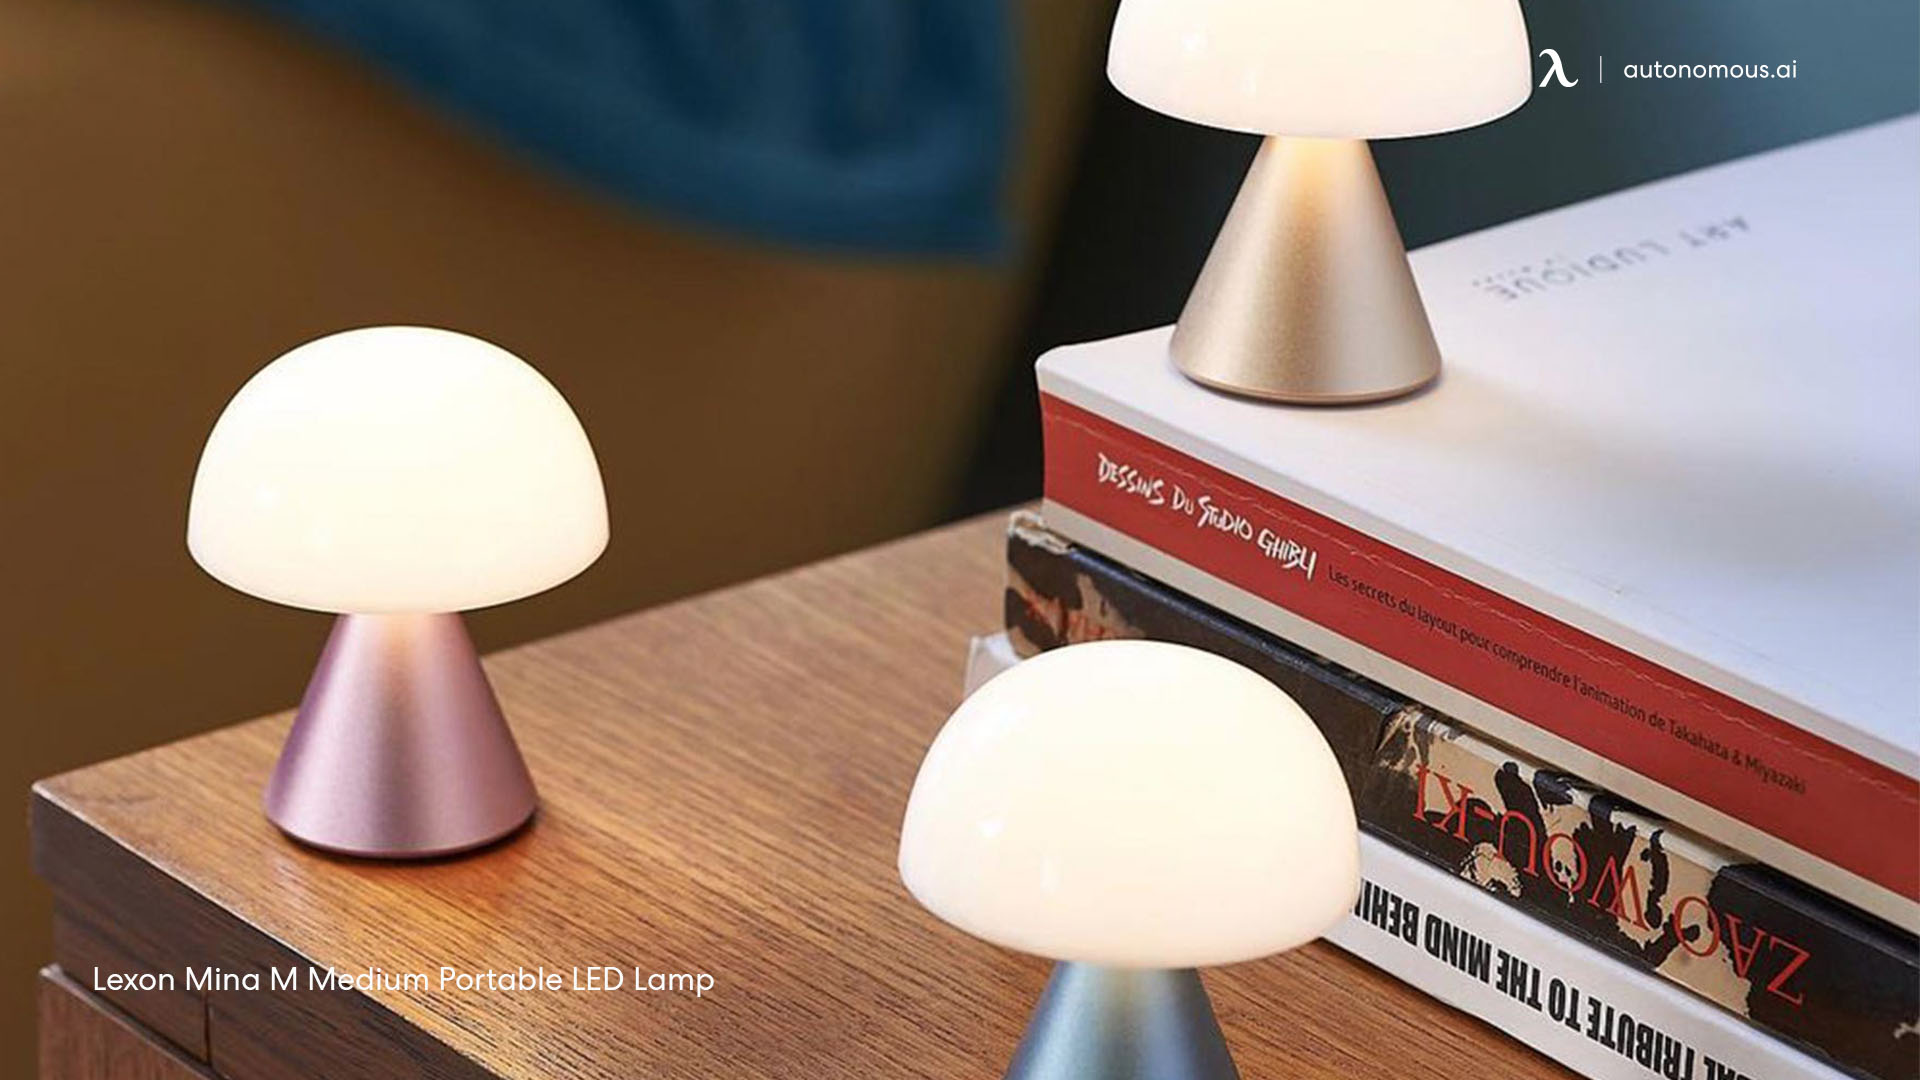 Lexon's Mina M Wireless LED Lamp